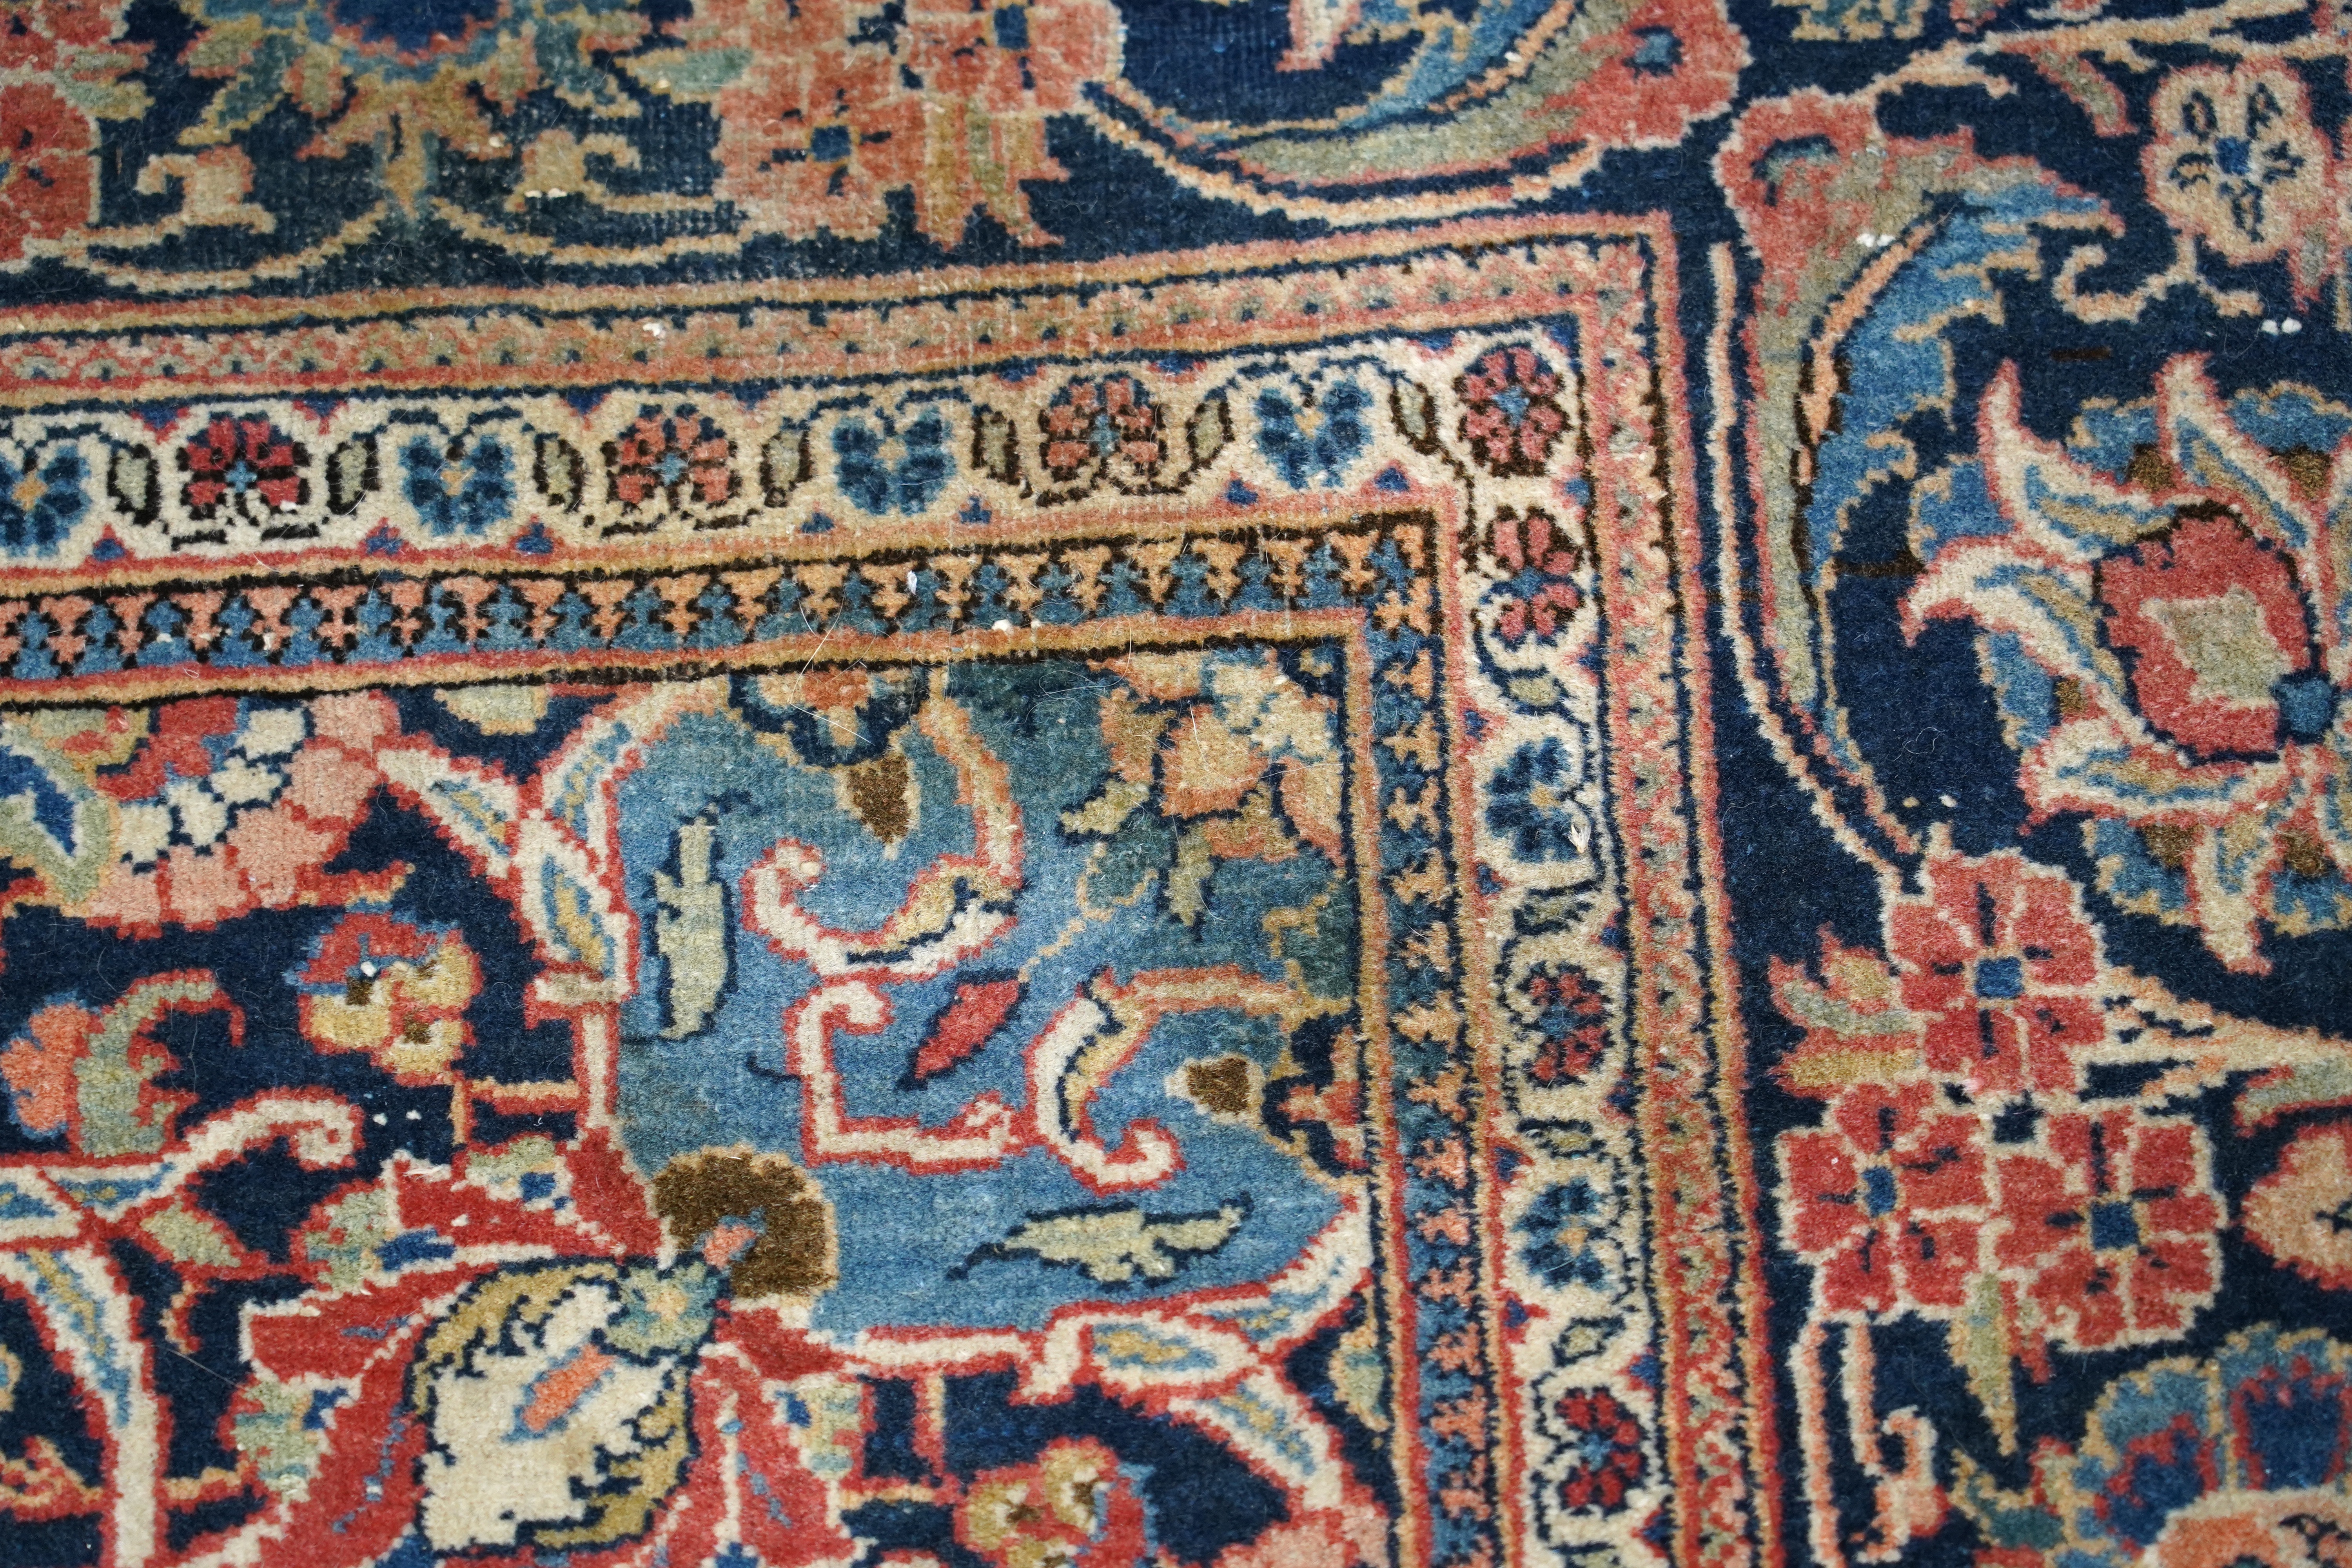 A pair of antique Tabriz brick red ground rugs, 200 x 136cm. Condition - fair